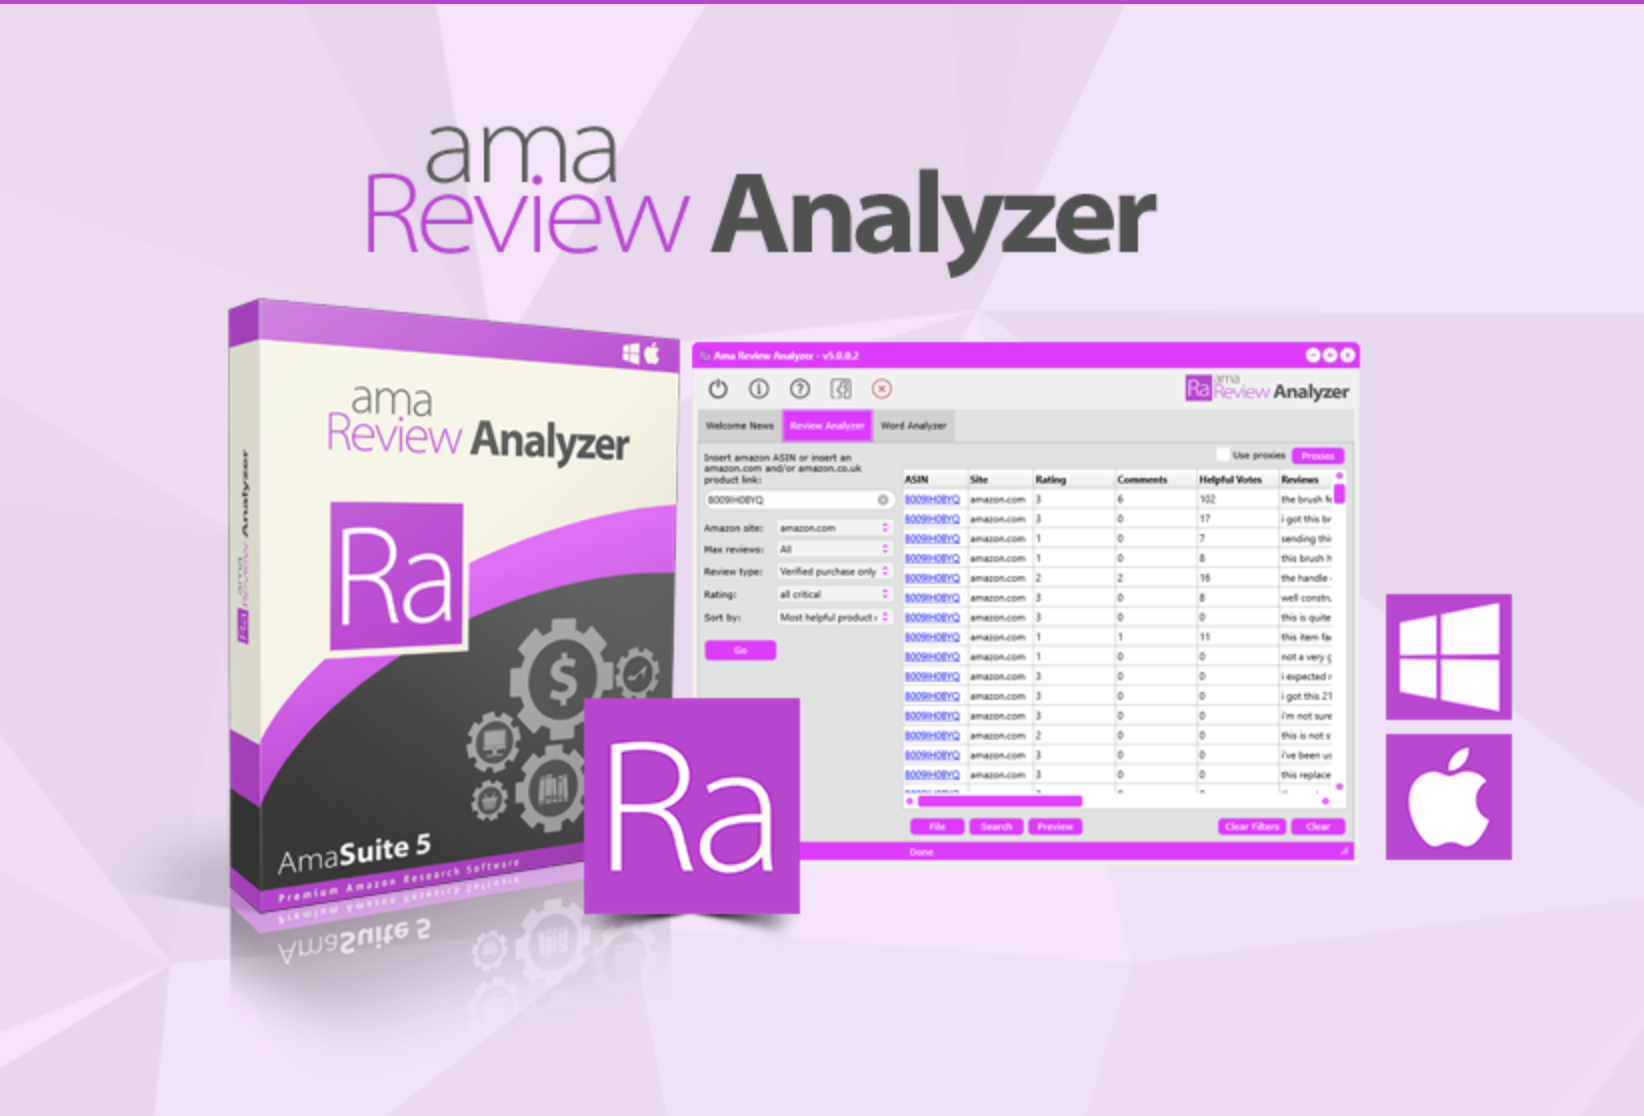 AmaSuite - Search Analyzer